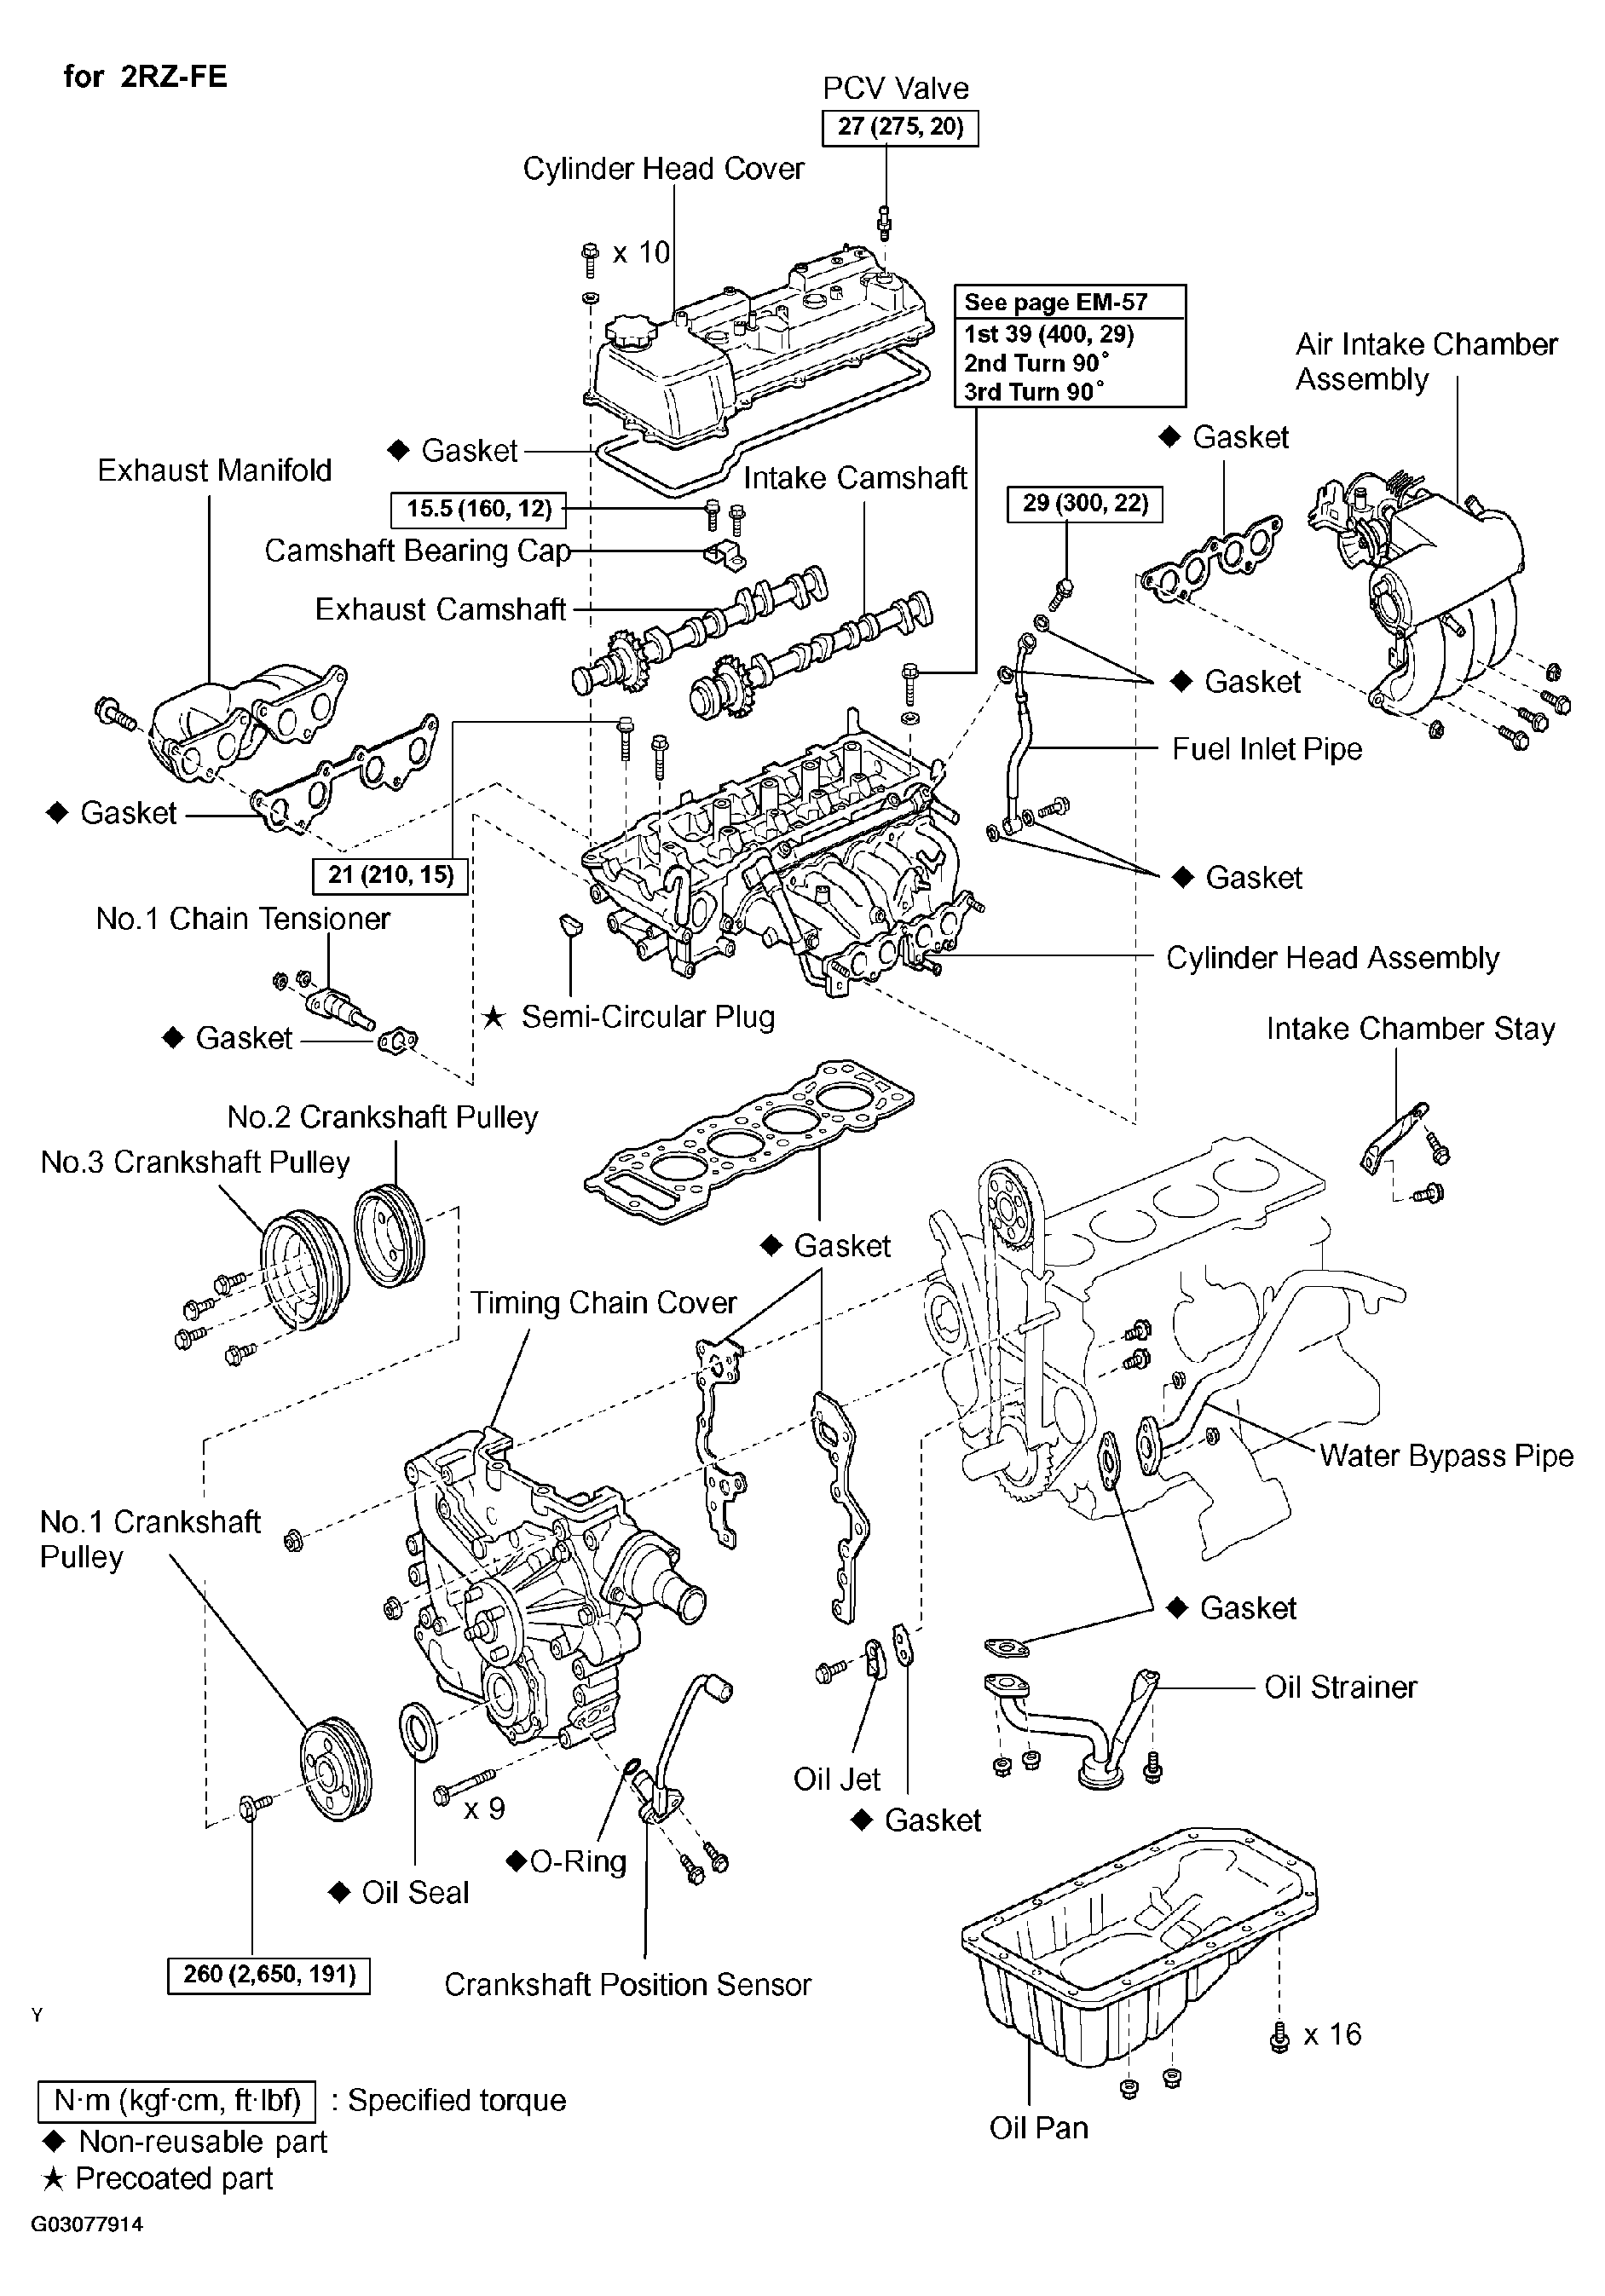 2007 Toyota Tacoma Parts Diagram